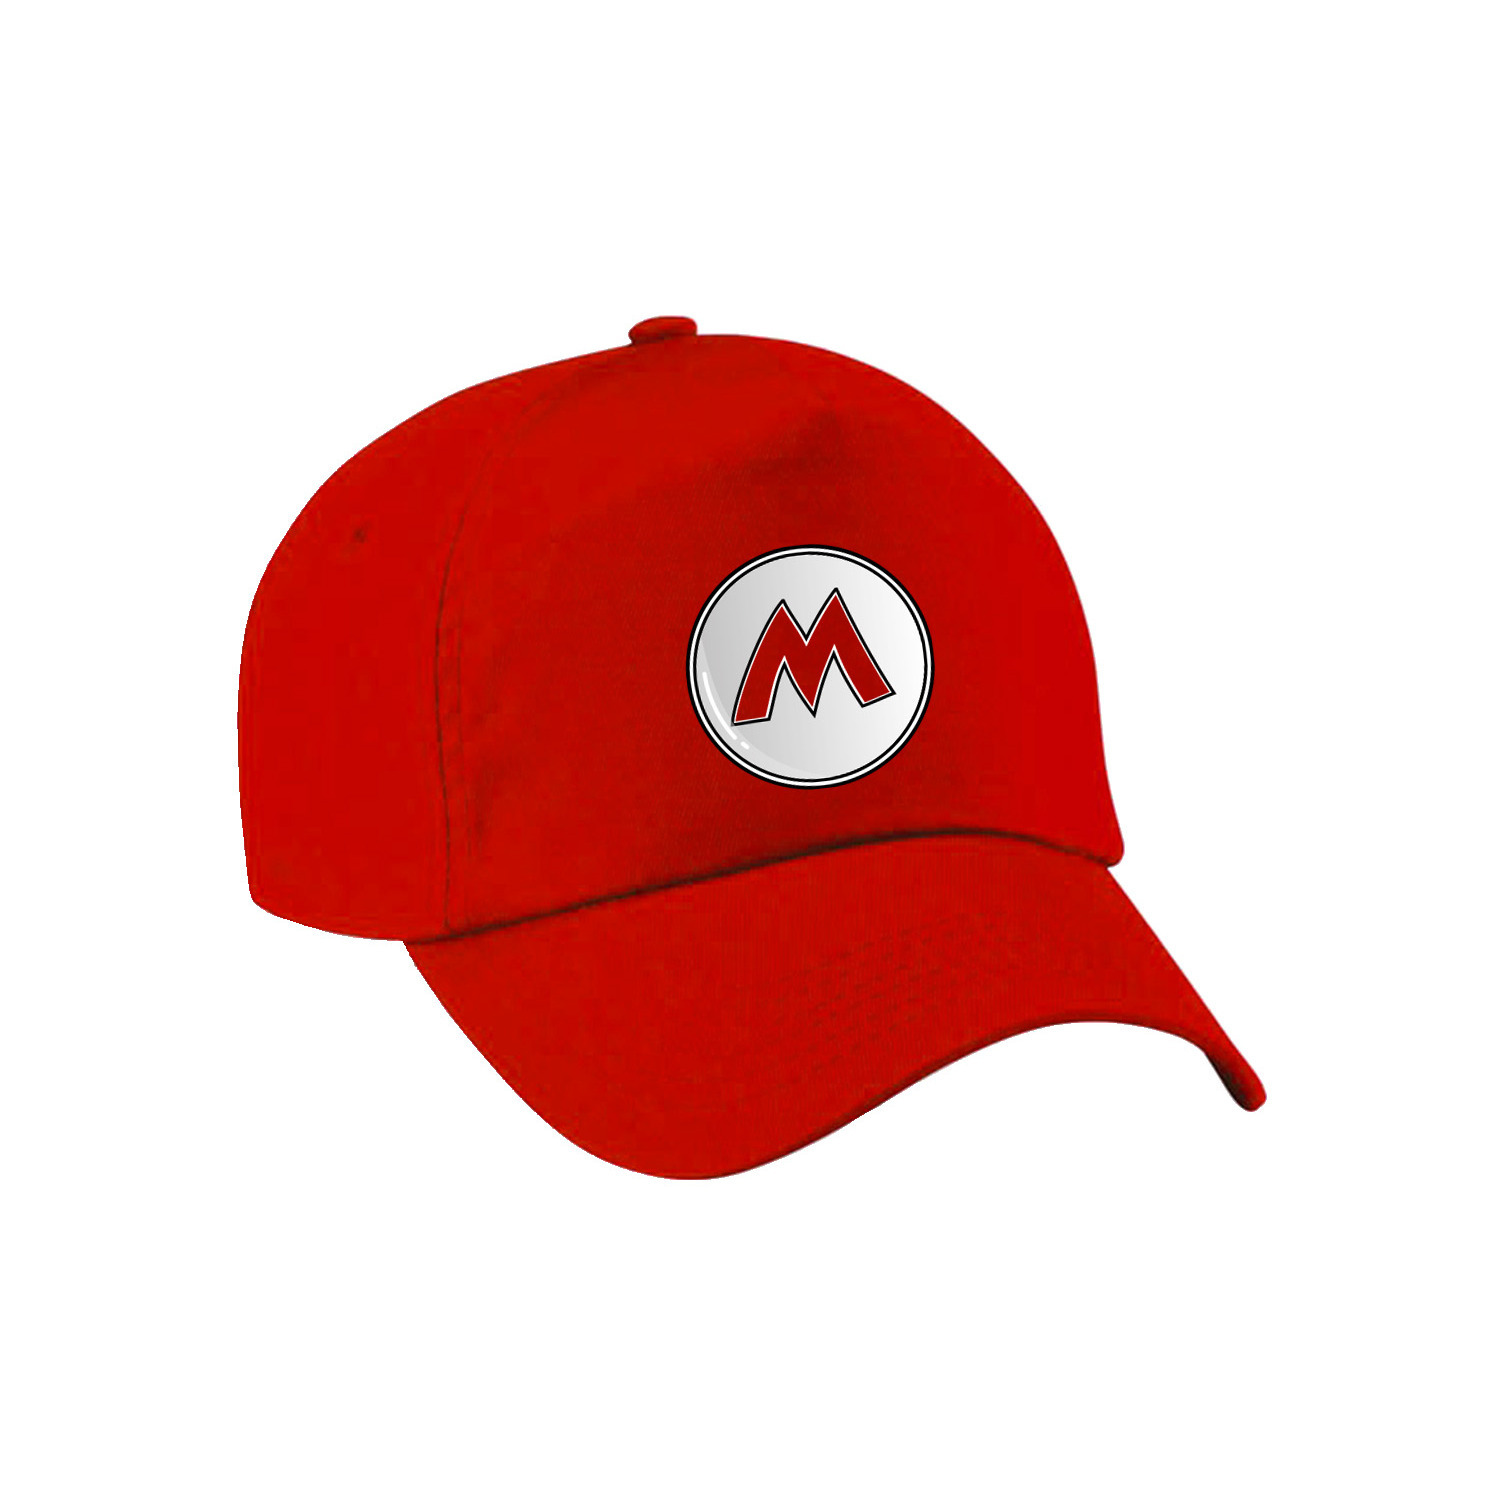 Game verkleed pet loodgieter Mario rood volwassenen unisex carnaval-themafeest outfit